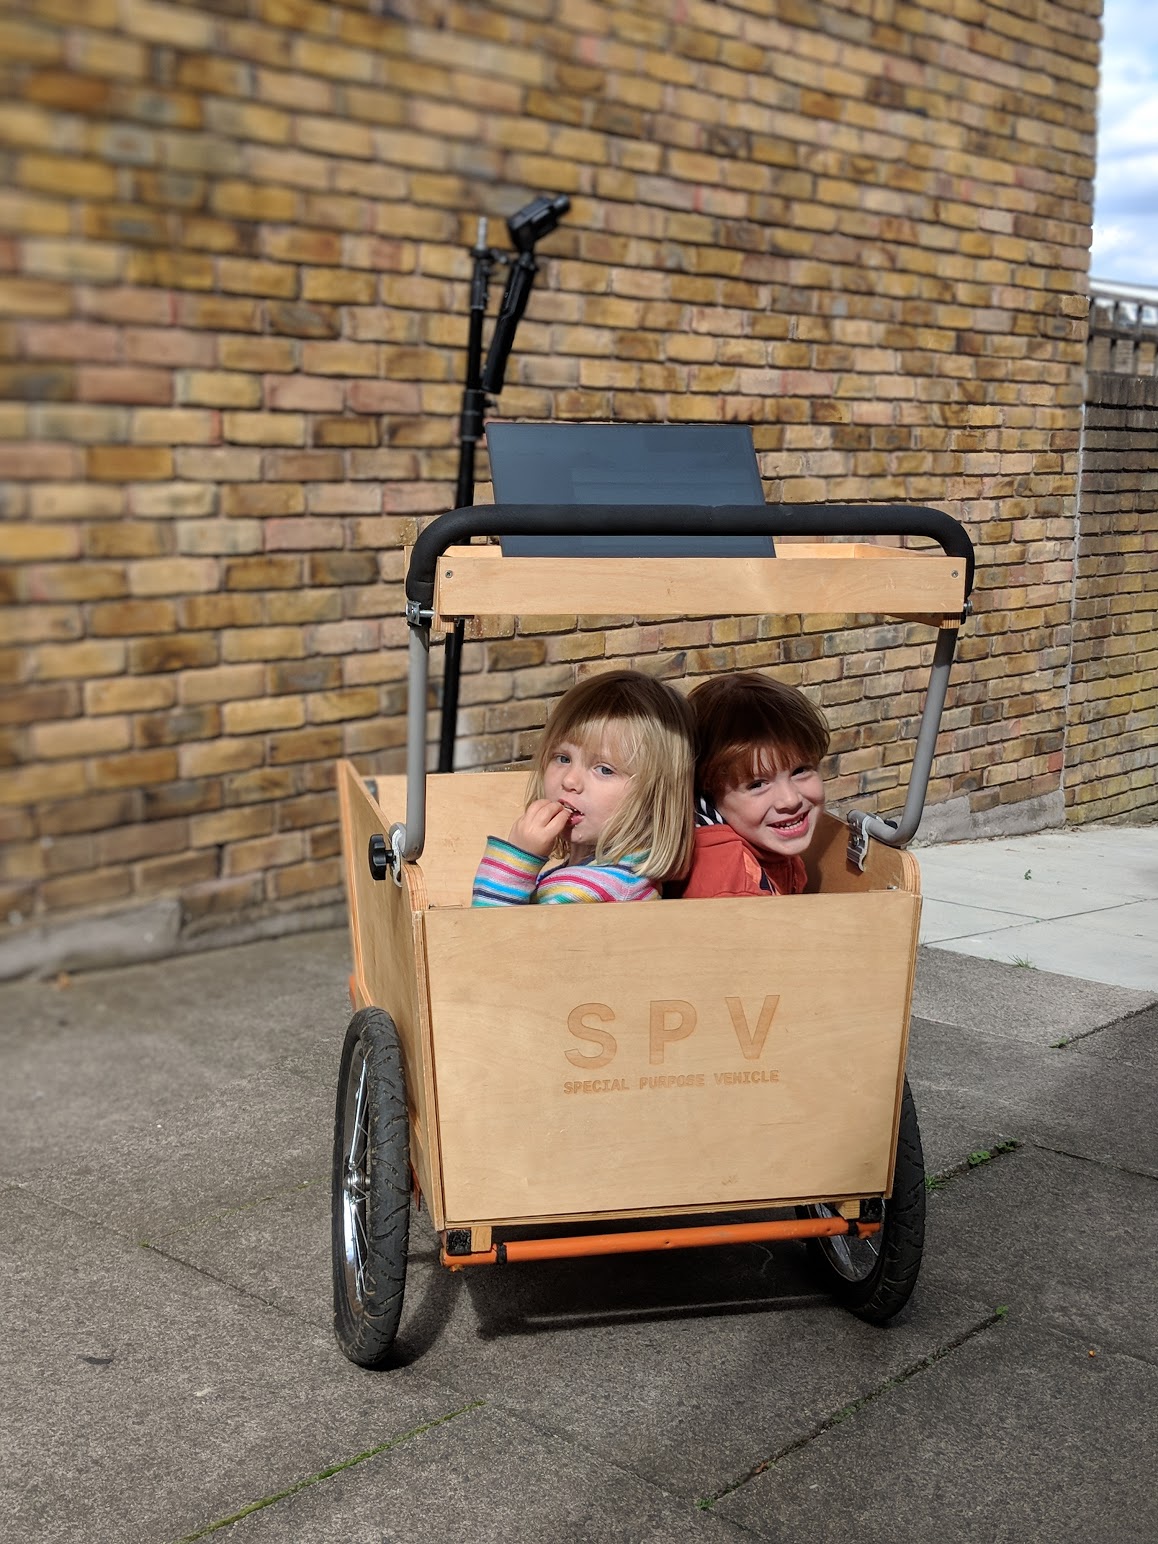 Smiling kids in a wooden bike trailer